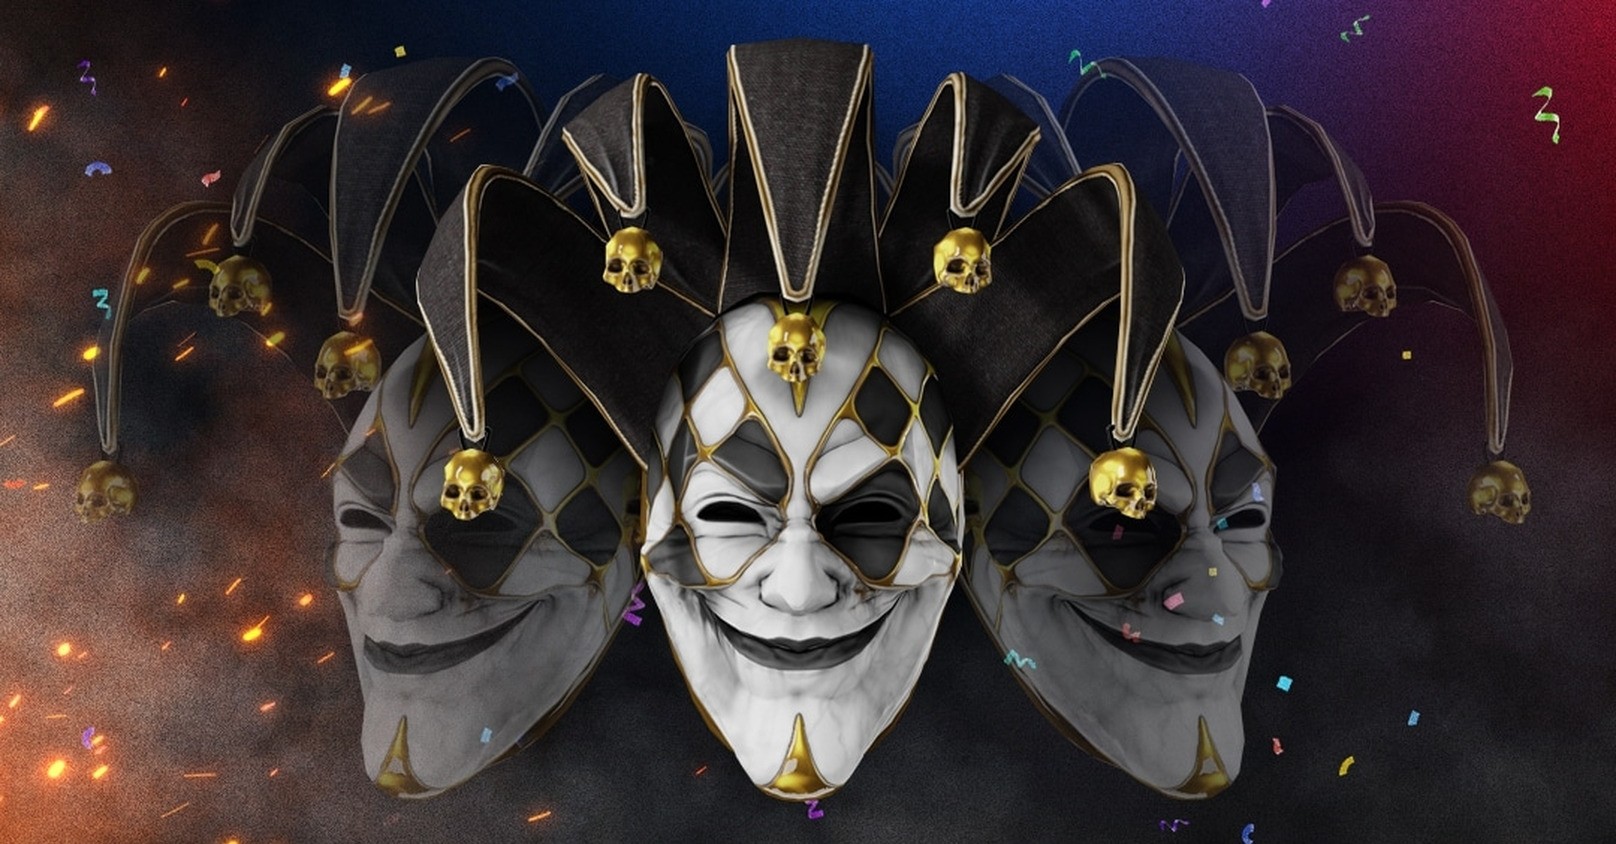 PAYDAY 2 - 10th Anniversary Jester Mask DLC Steam CD Key, $1.44